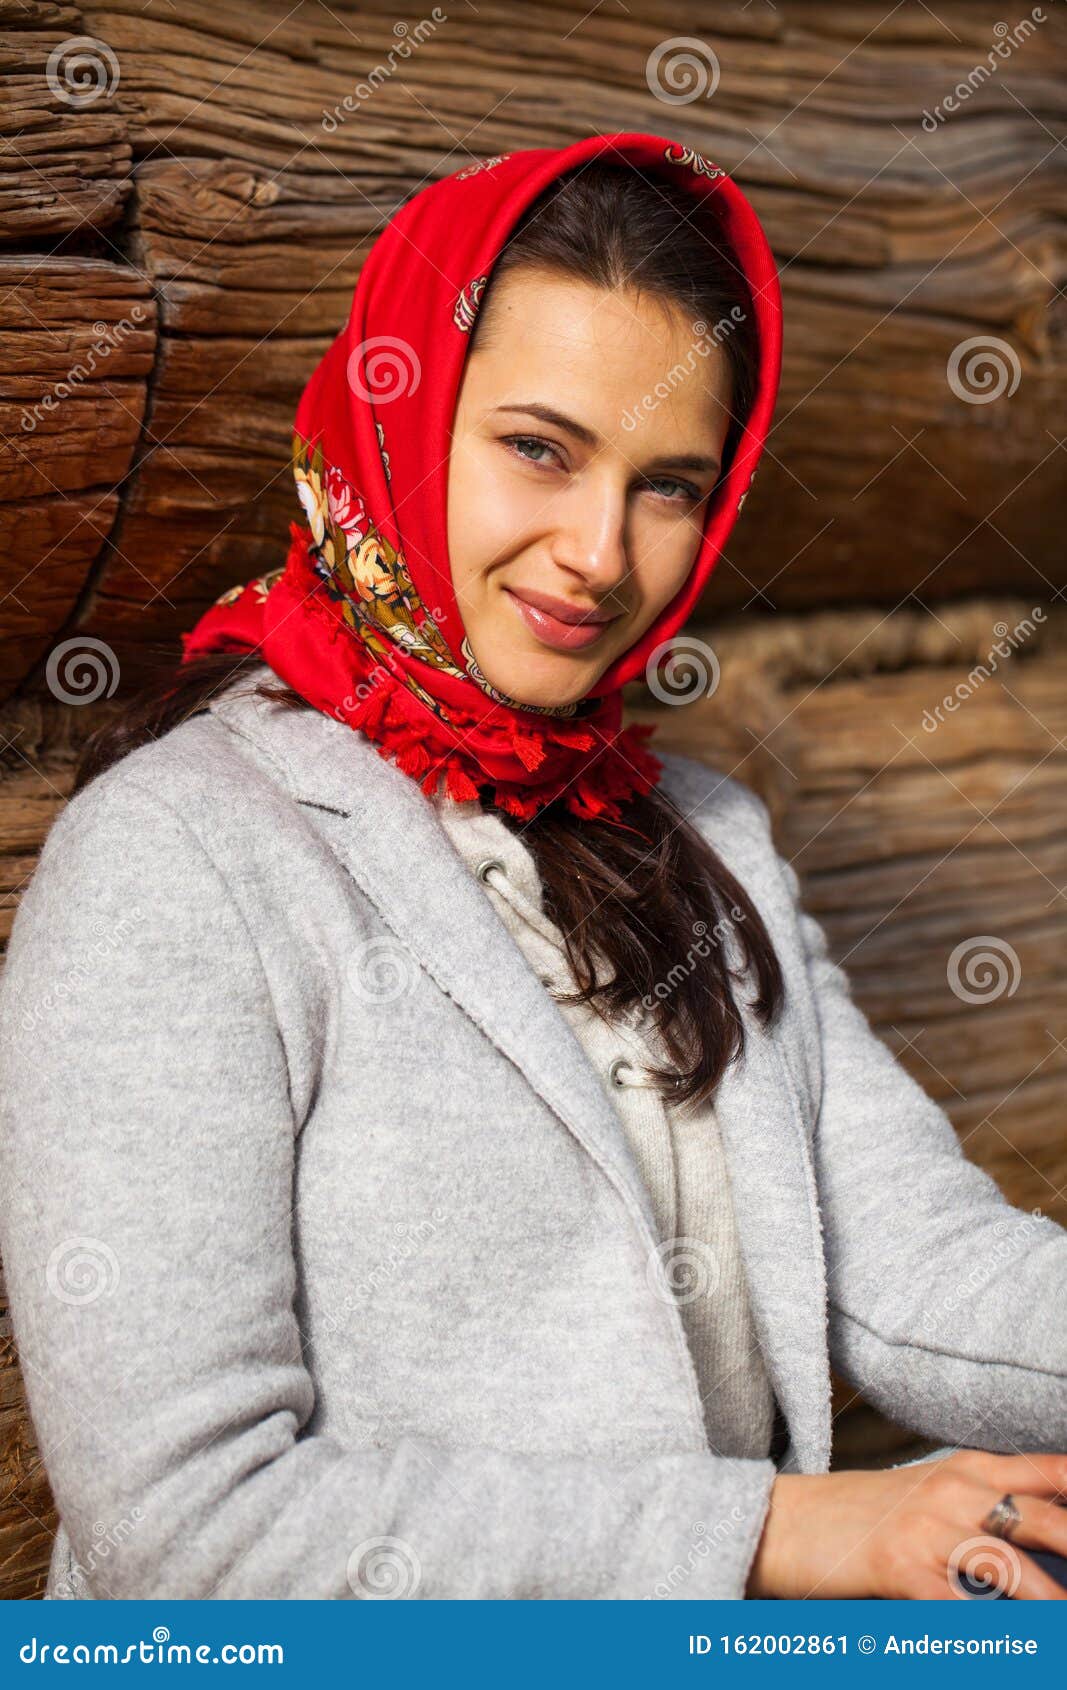 https://thumbs.dreamstime.com/z/portrait-young-beautiful-woman-red-handkerchief-russian-beauty-portrait-young-beautiful-woman-red-scarf-162002861.jpg